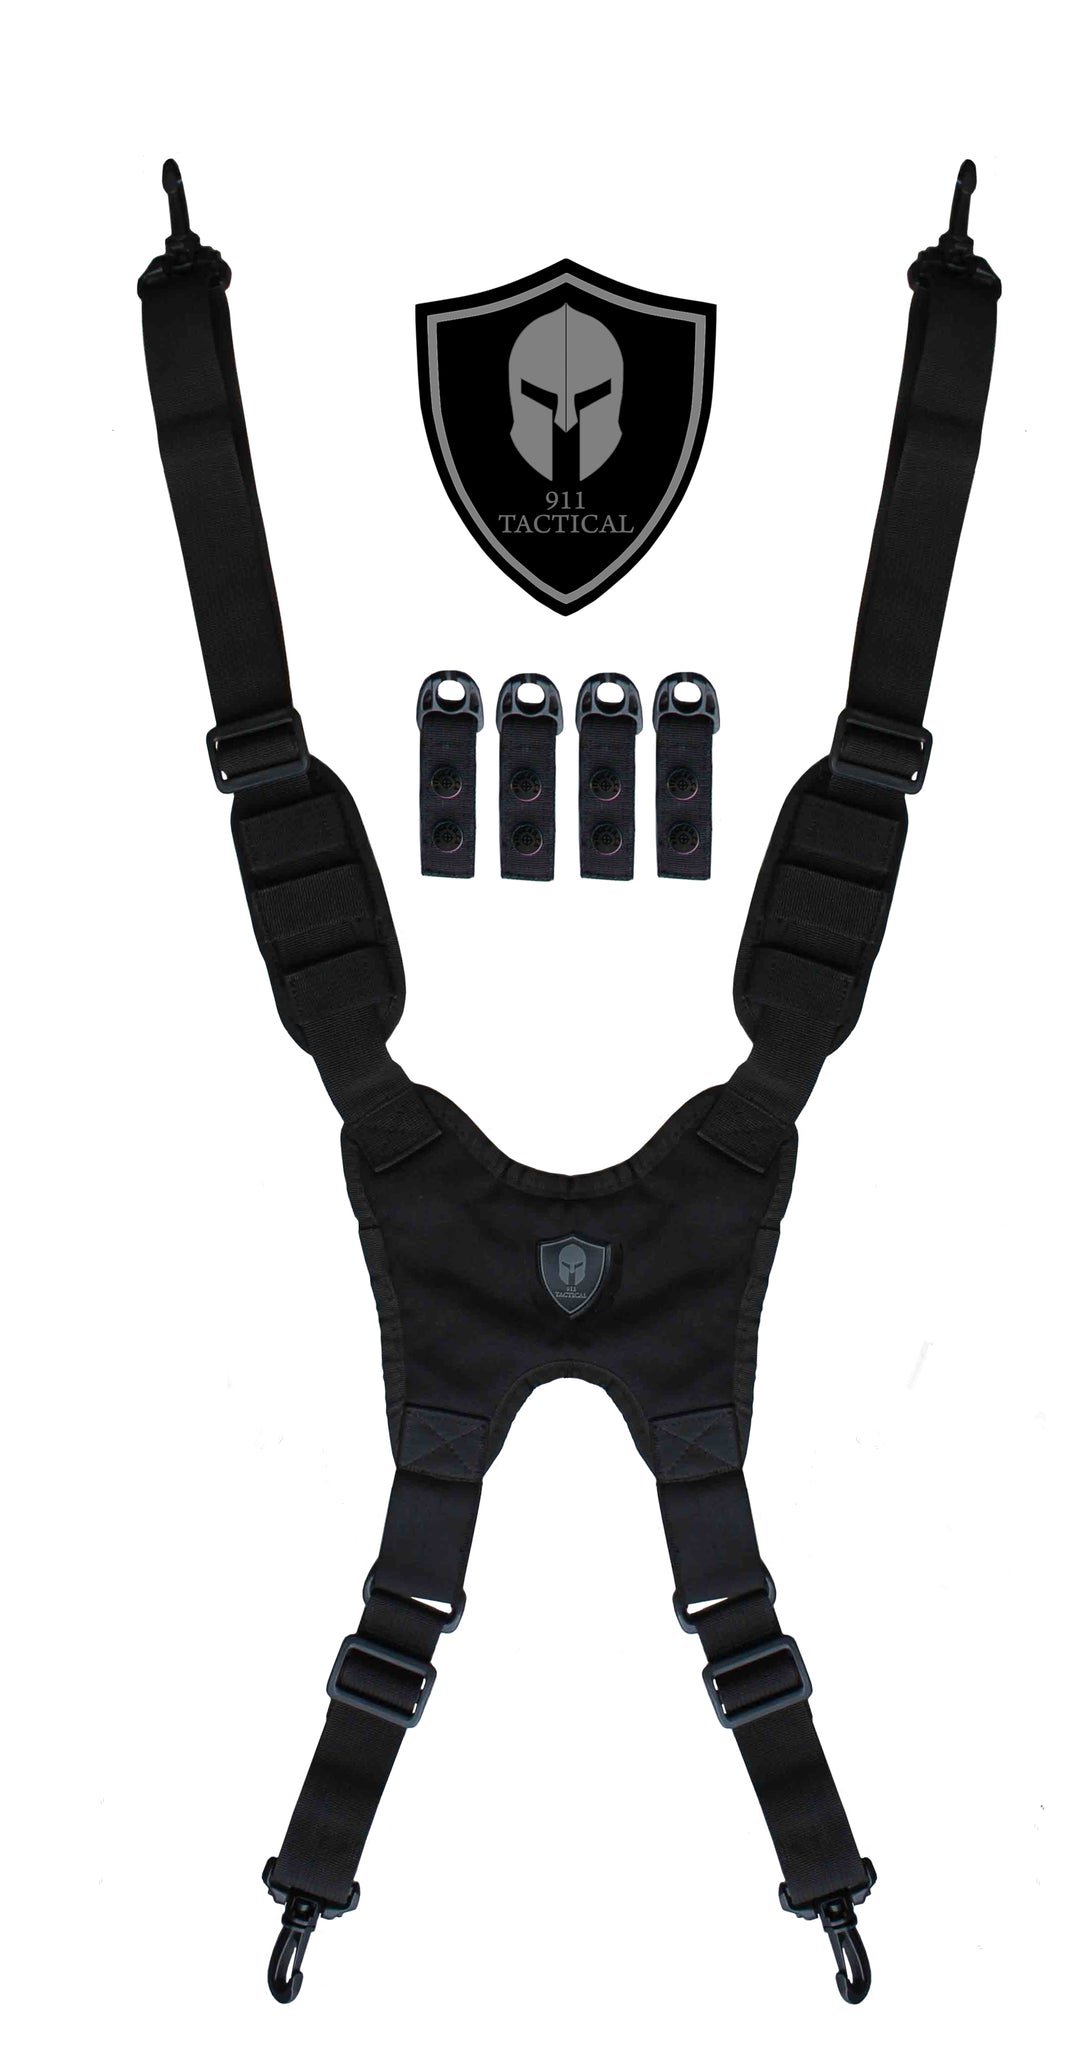 4th Gen Tactical Suspenders – Black Bear Gear